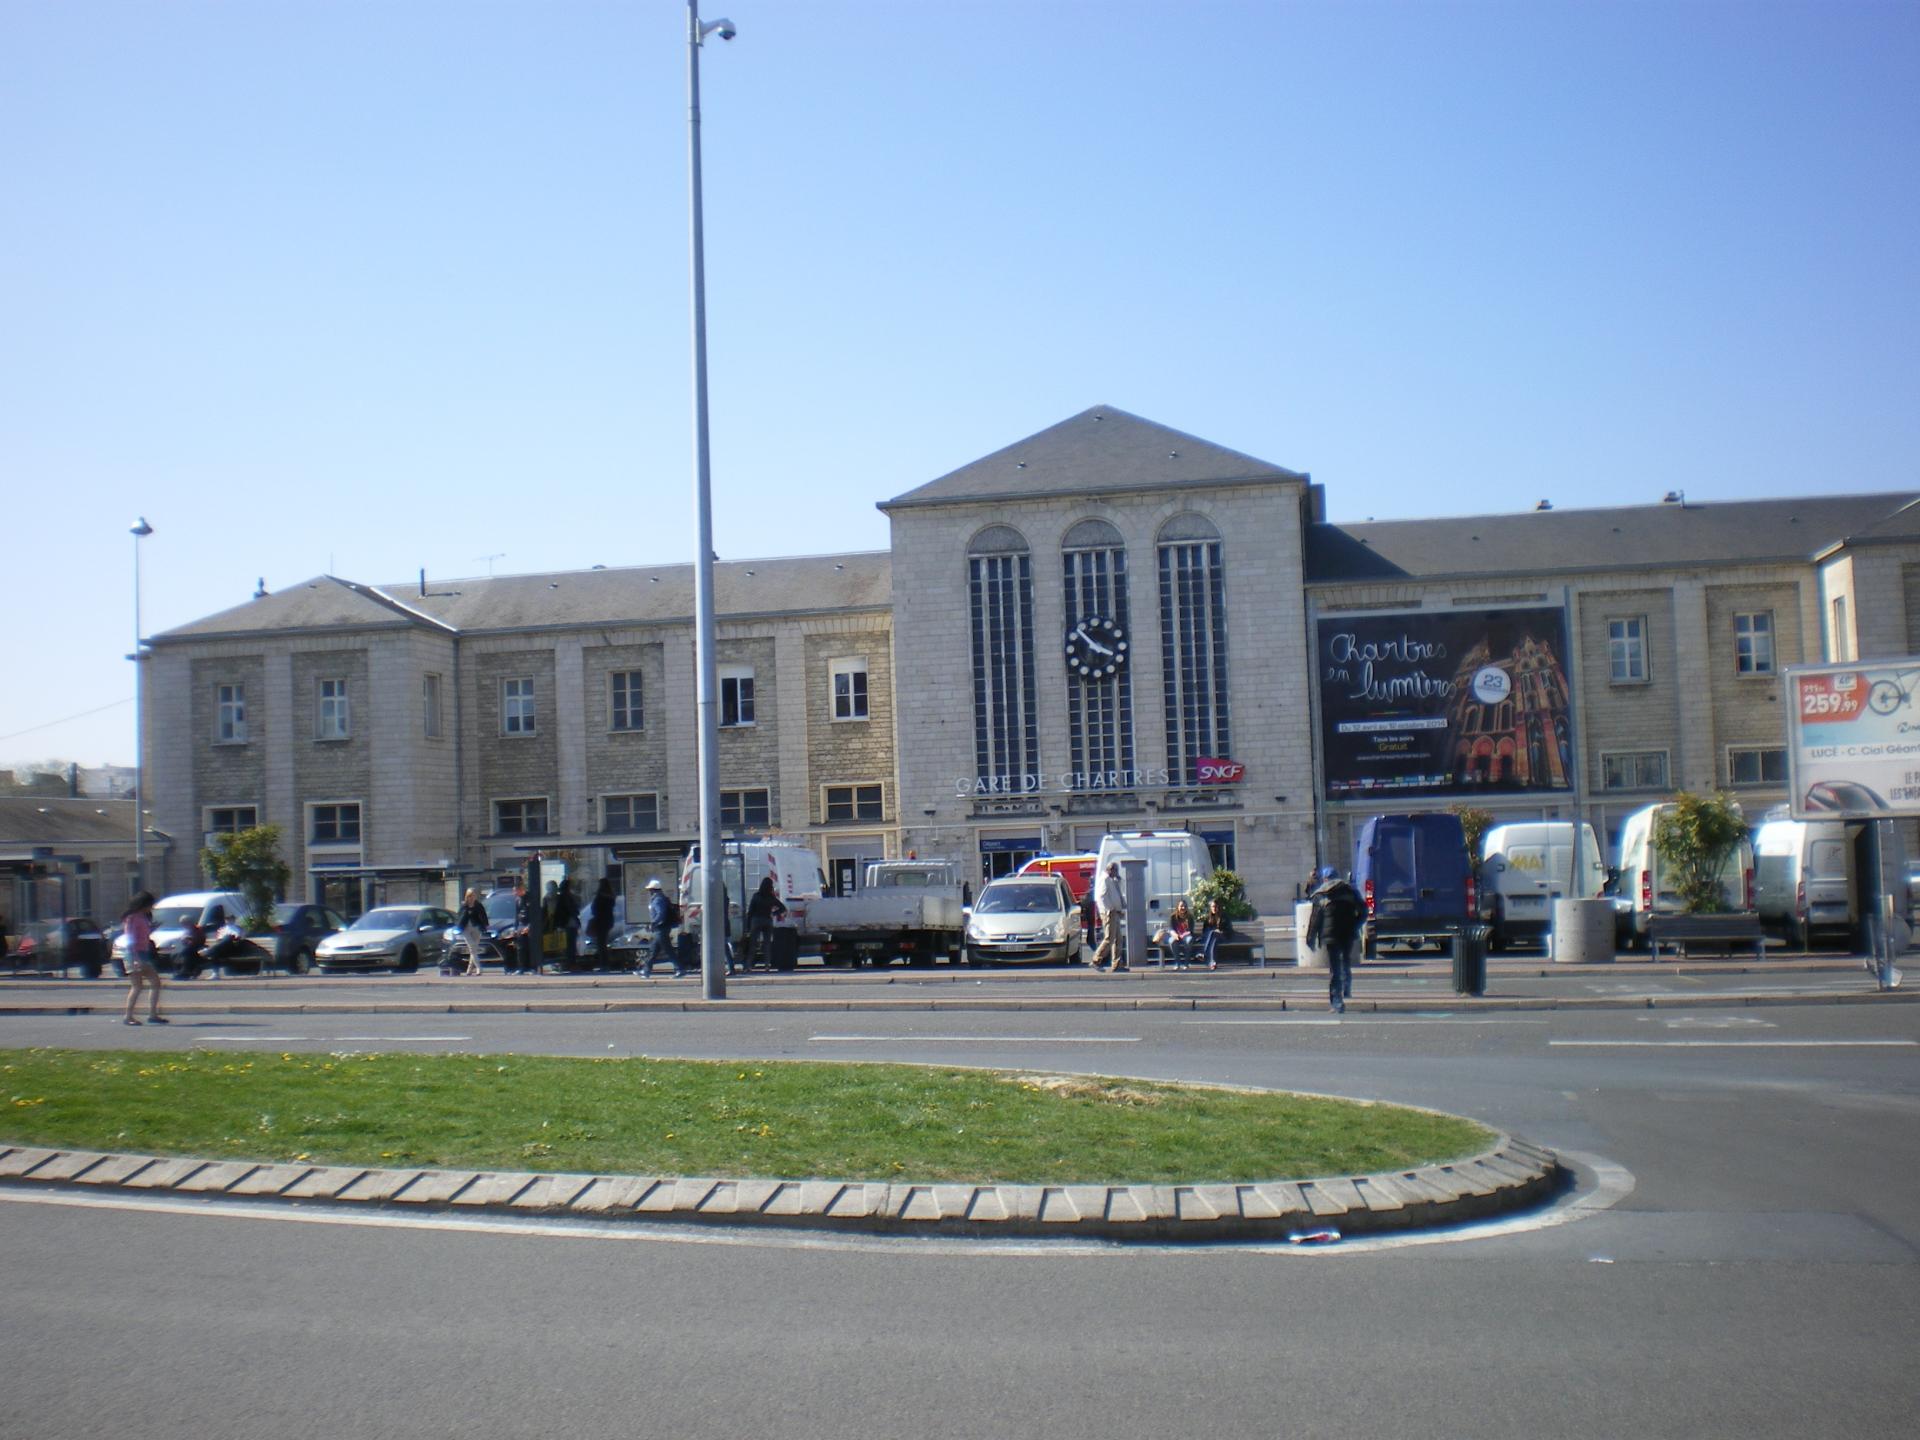 Gare chartres 1